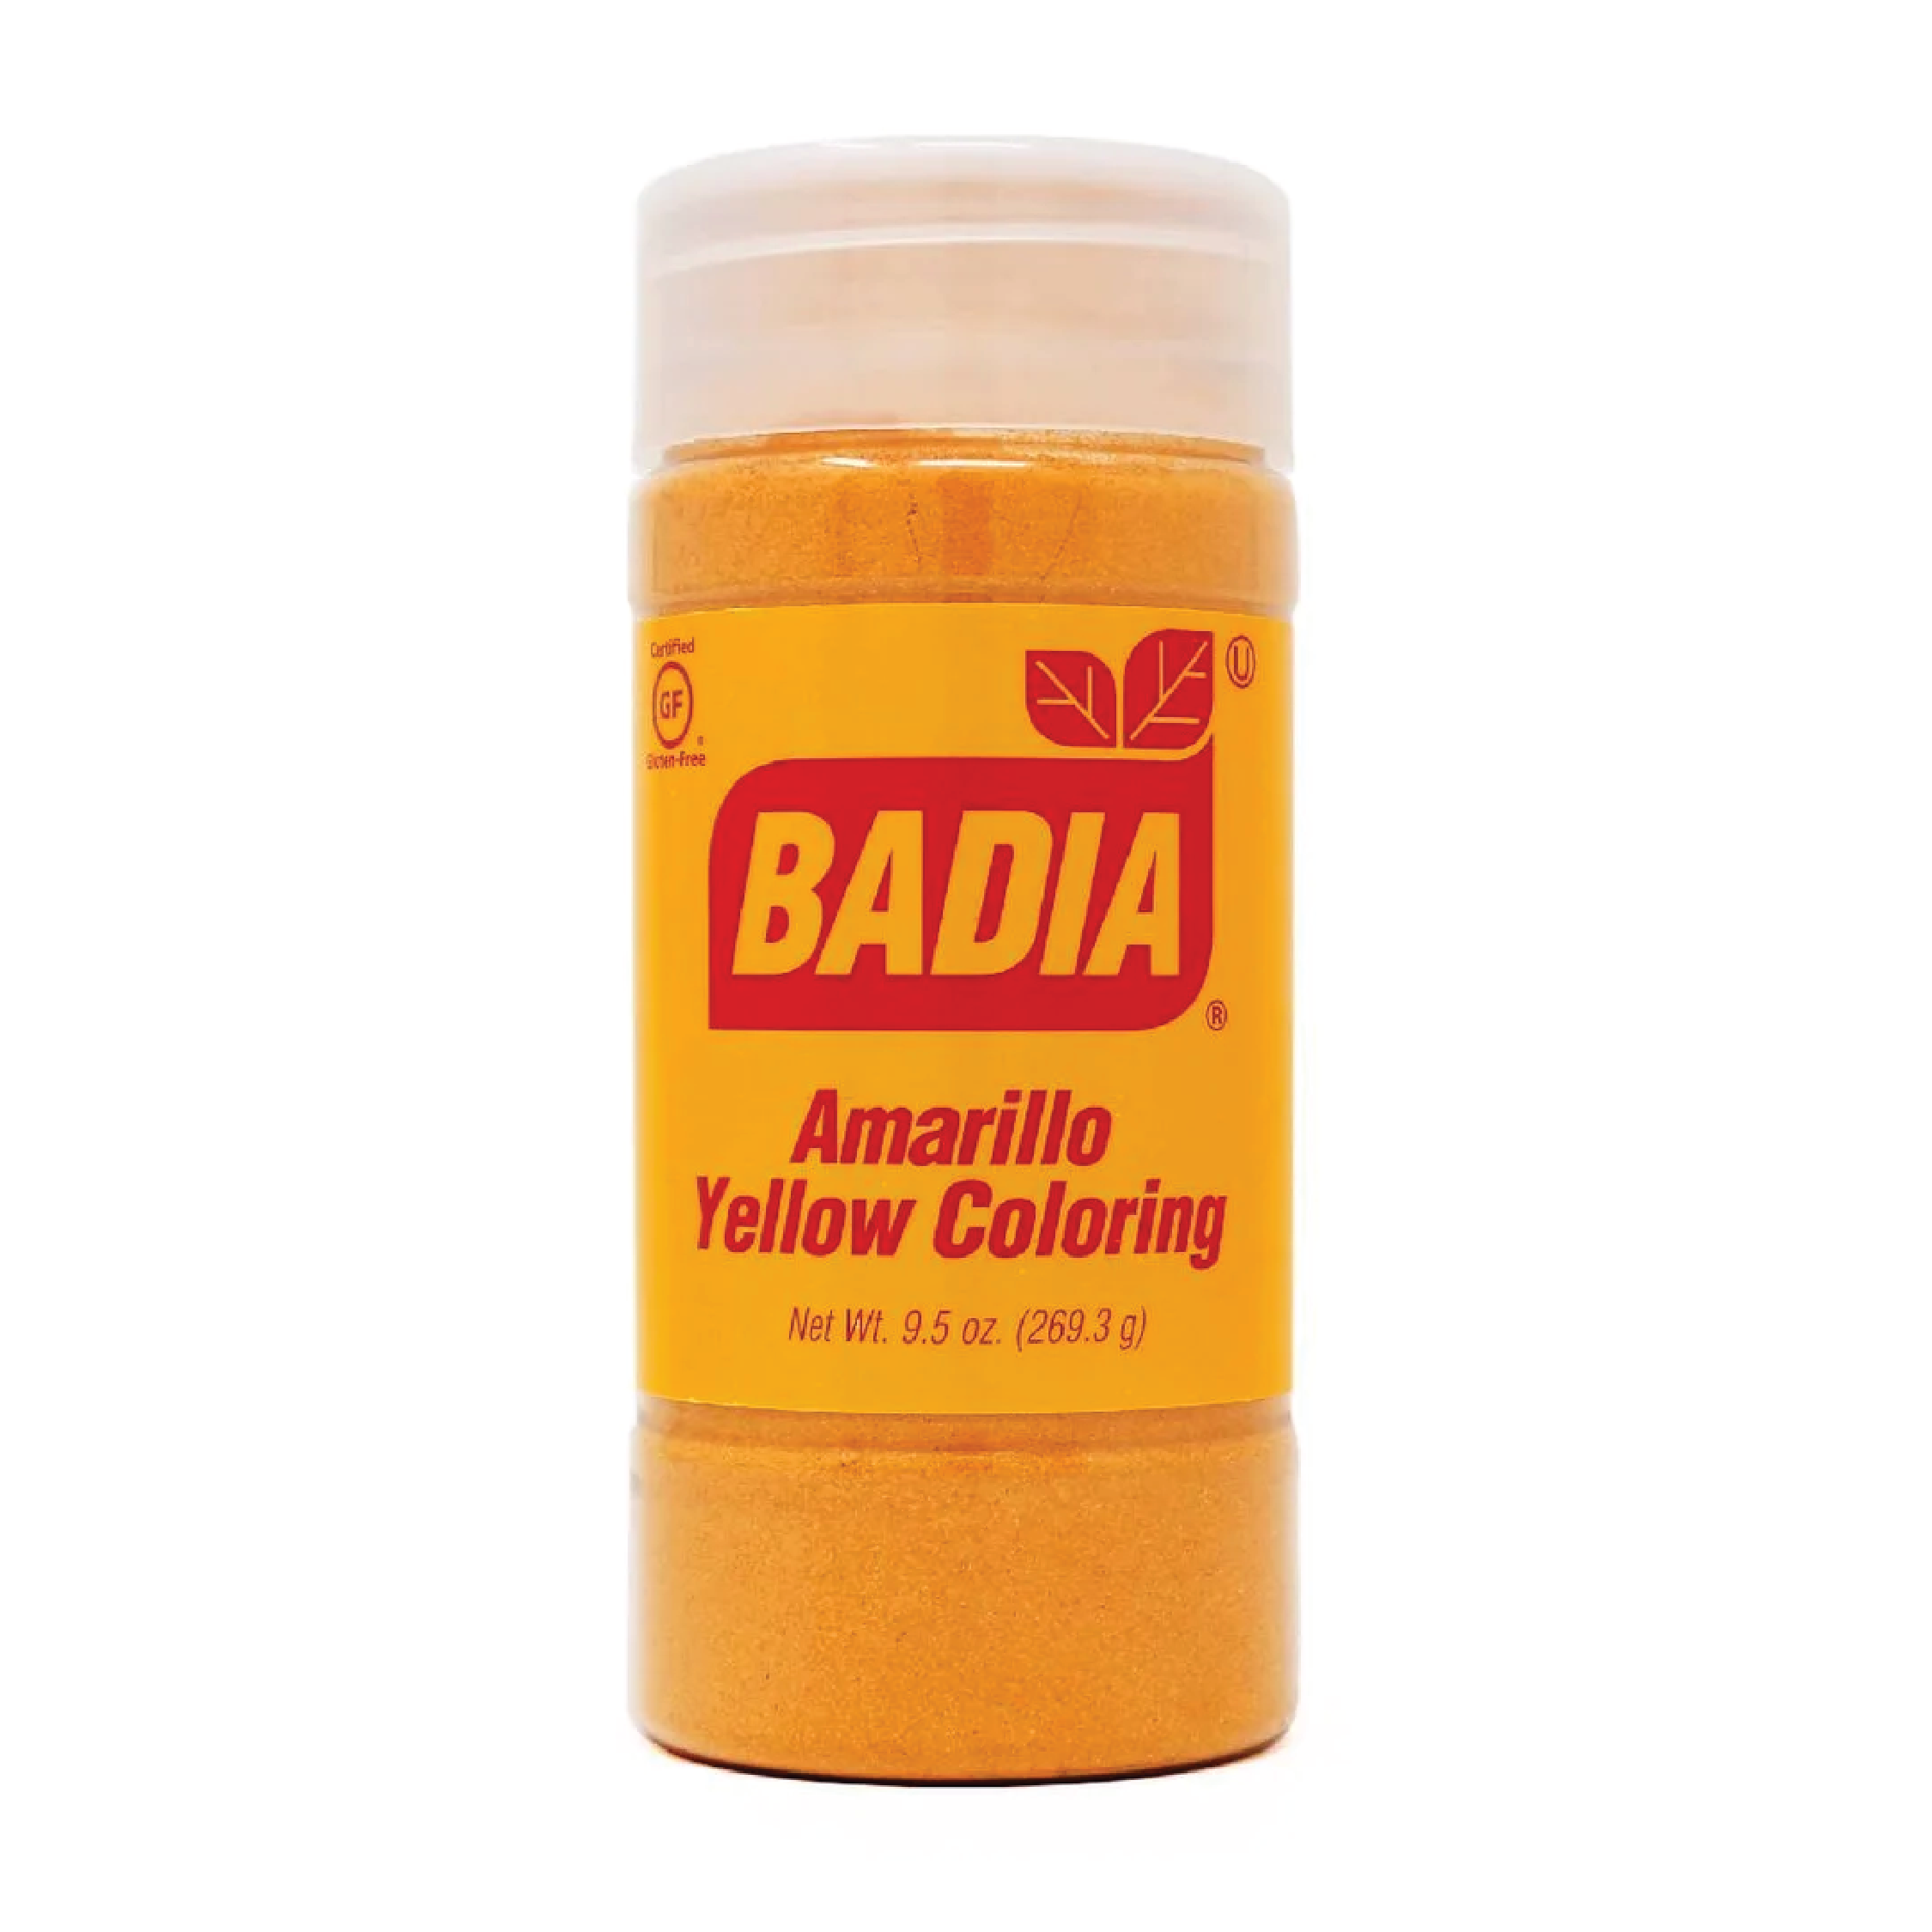 Badia Amarillo Yellow Coloring Shaker 4.25oz